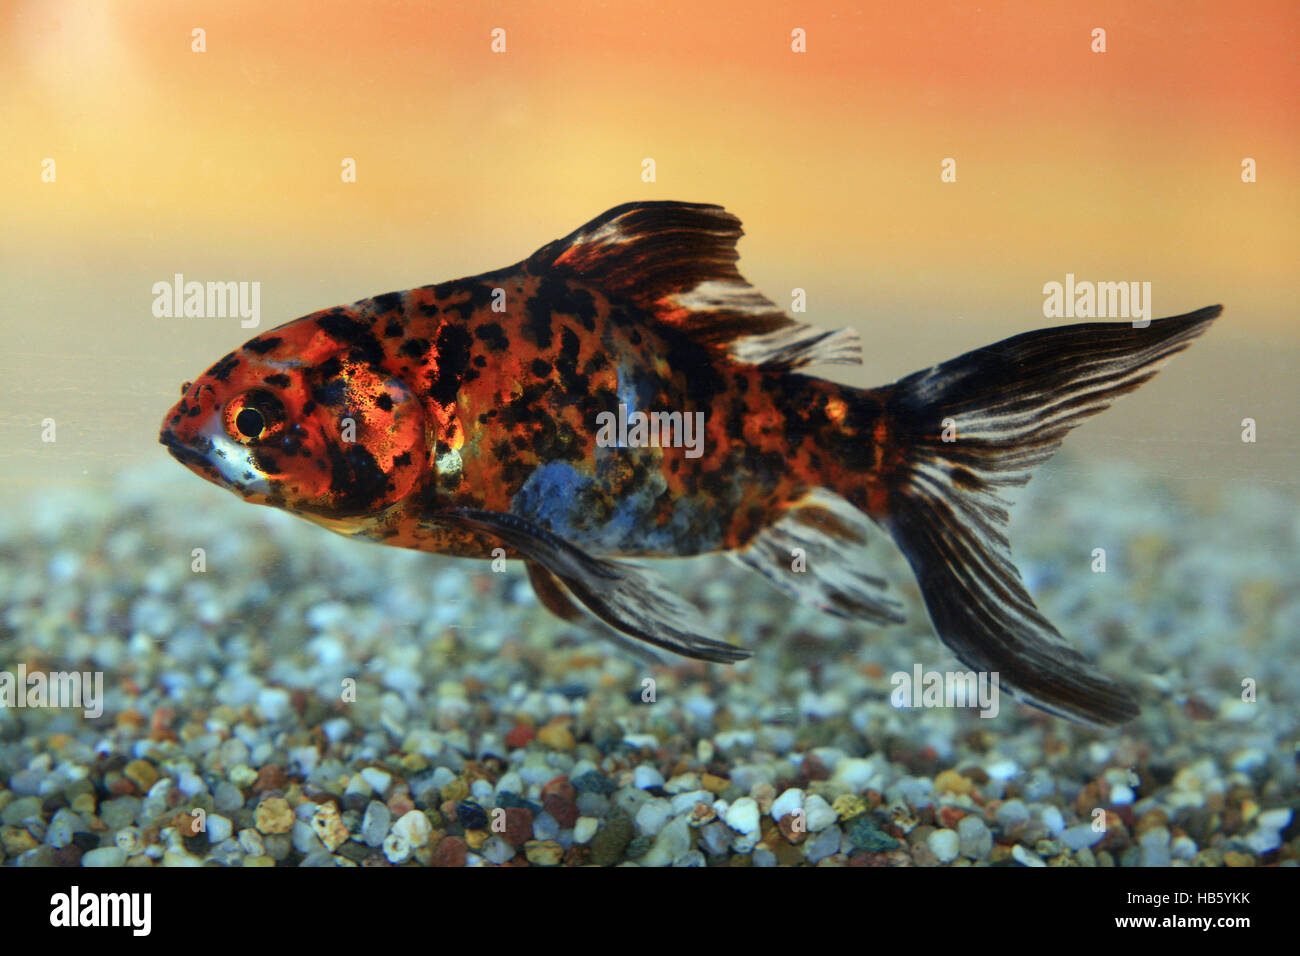 Shubunkin Goldfisch Stockfoto